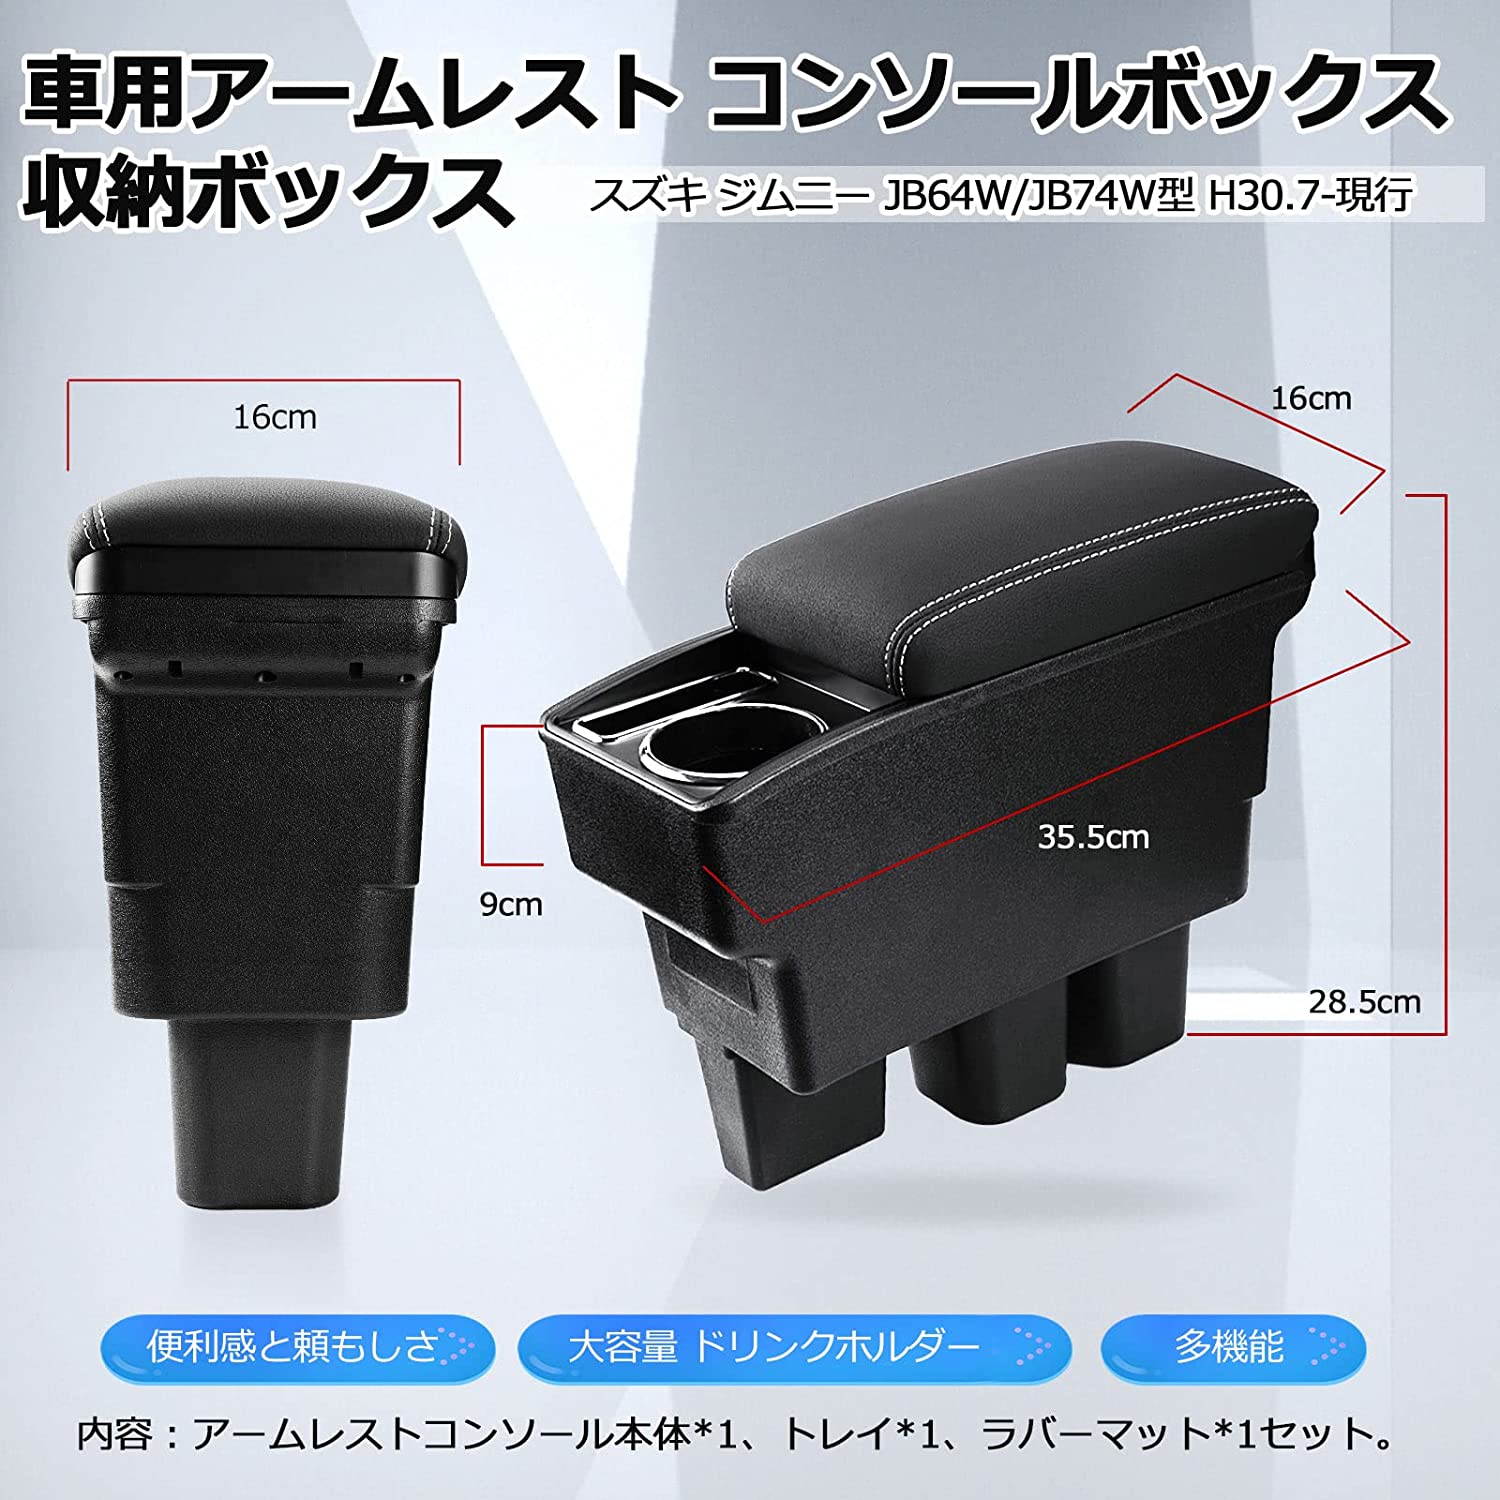 Buy Suzuki Jimny Armrest Console Box JIMNY 2019-2020 JB64 JB74 Dedicated  7USB Ports from Japan - Buy authentic Plus exclusive items from Japan